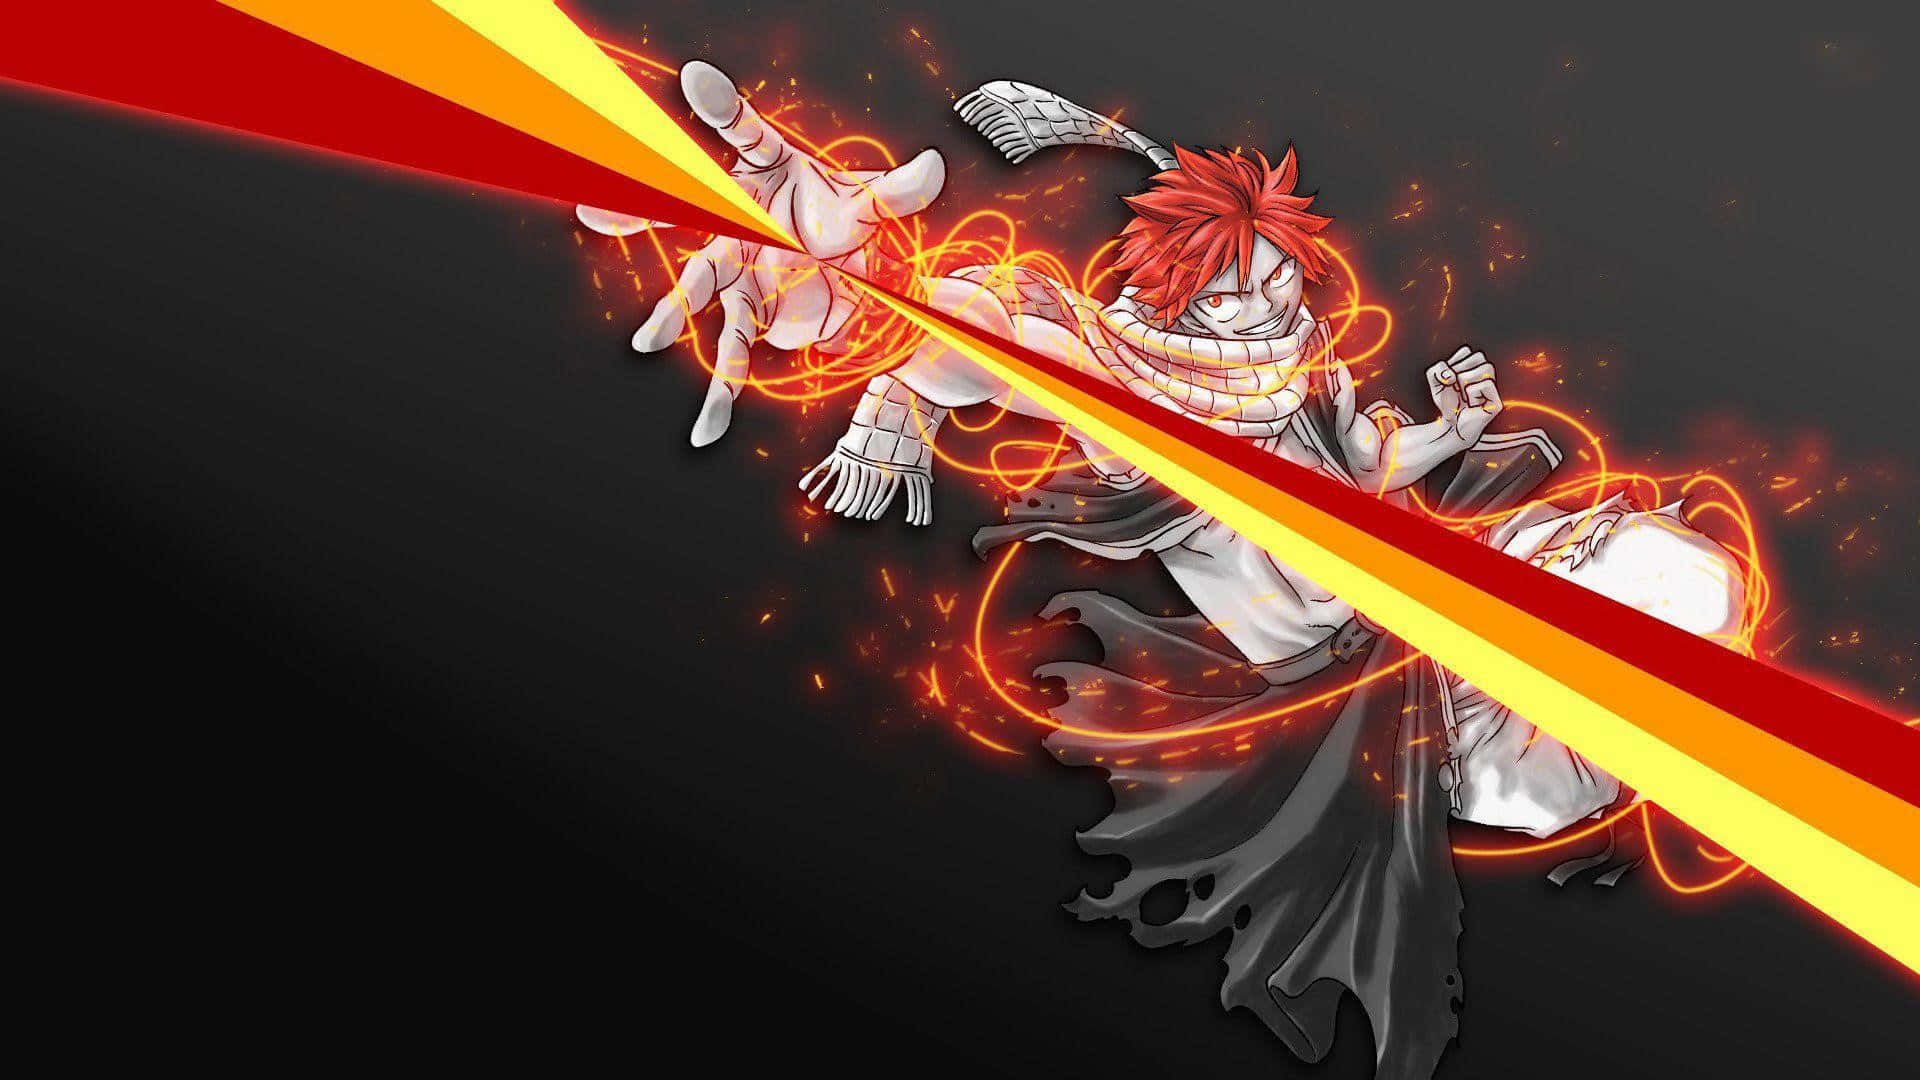 Fiery Natsu Dragneel Unleashing His Dragon Force Power